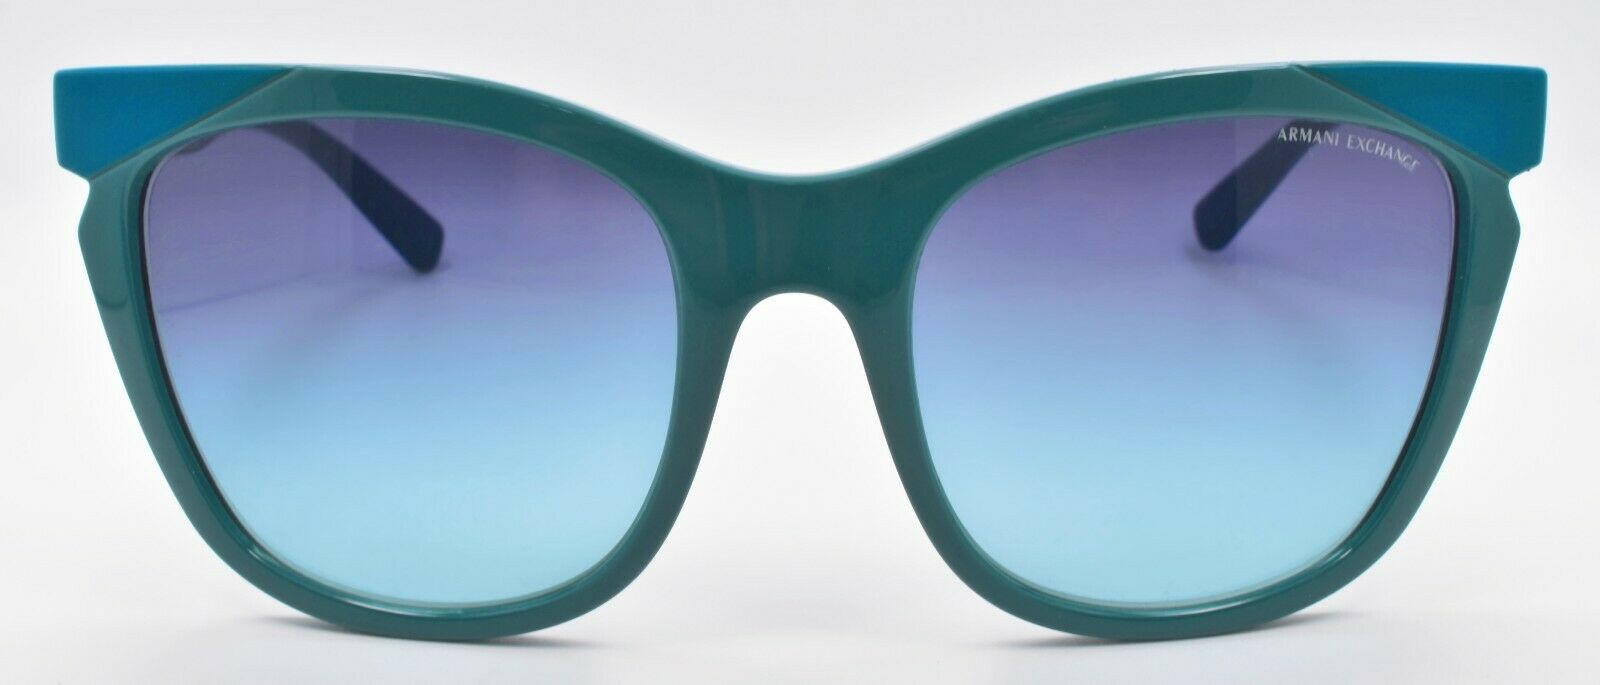 2-Armani Exchange AX4109S 82124S Women's Sunglasses Light Blue / Azure Gradient-7895653216822-IKSpecs